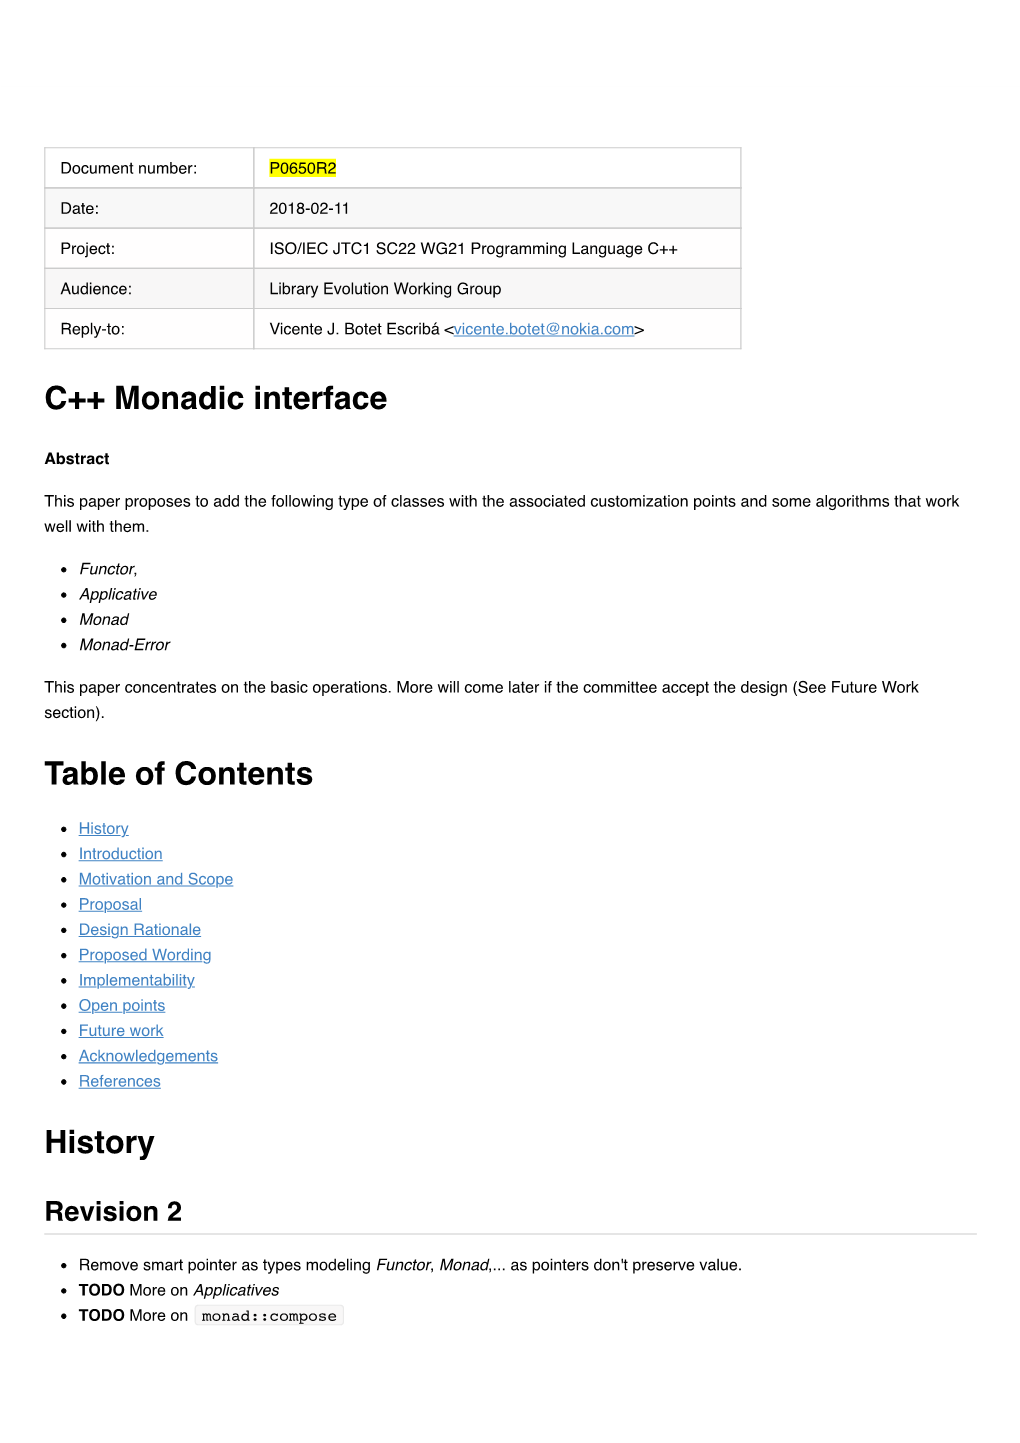 C++ Monadic Interface